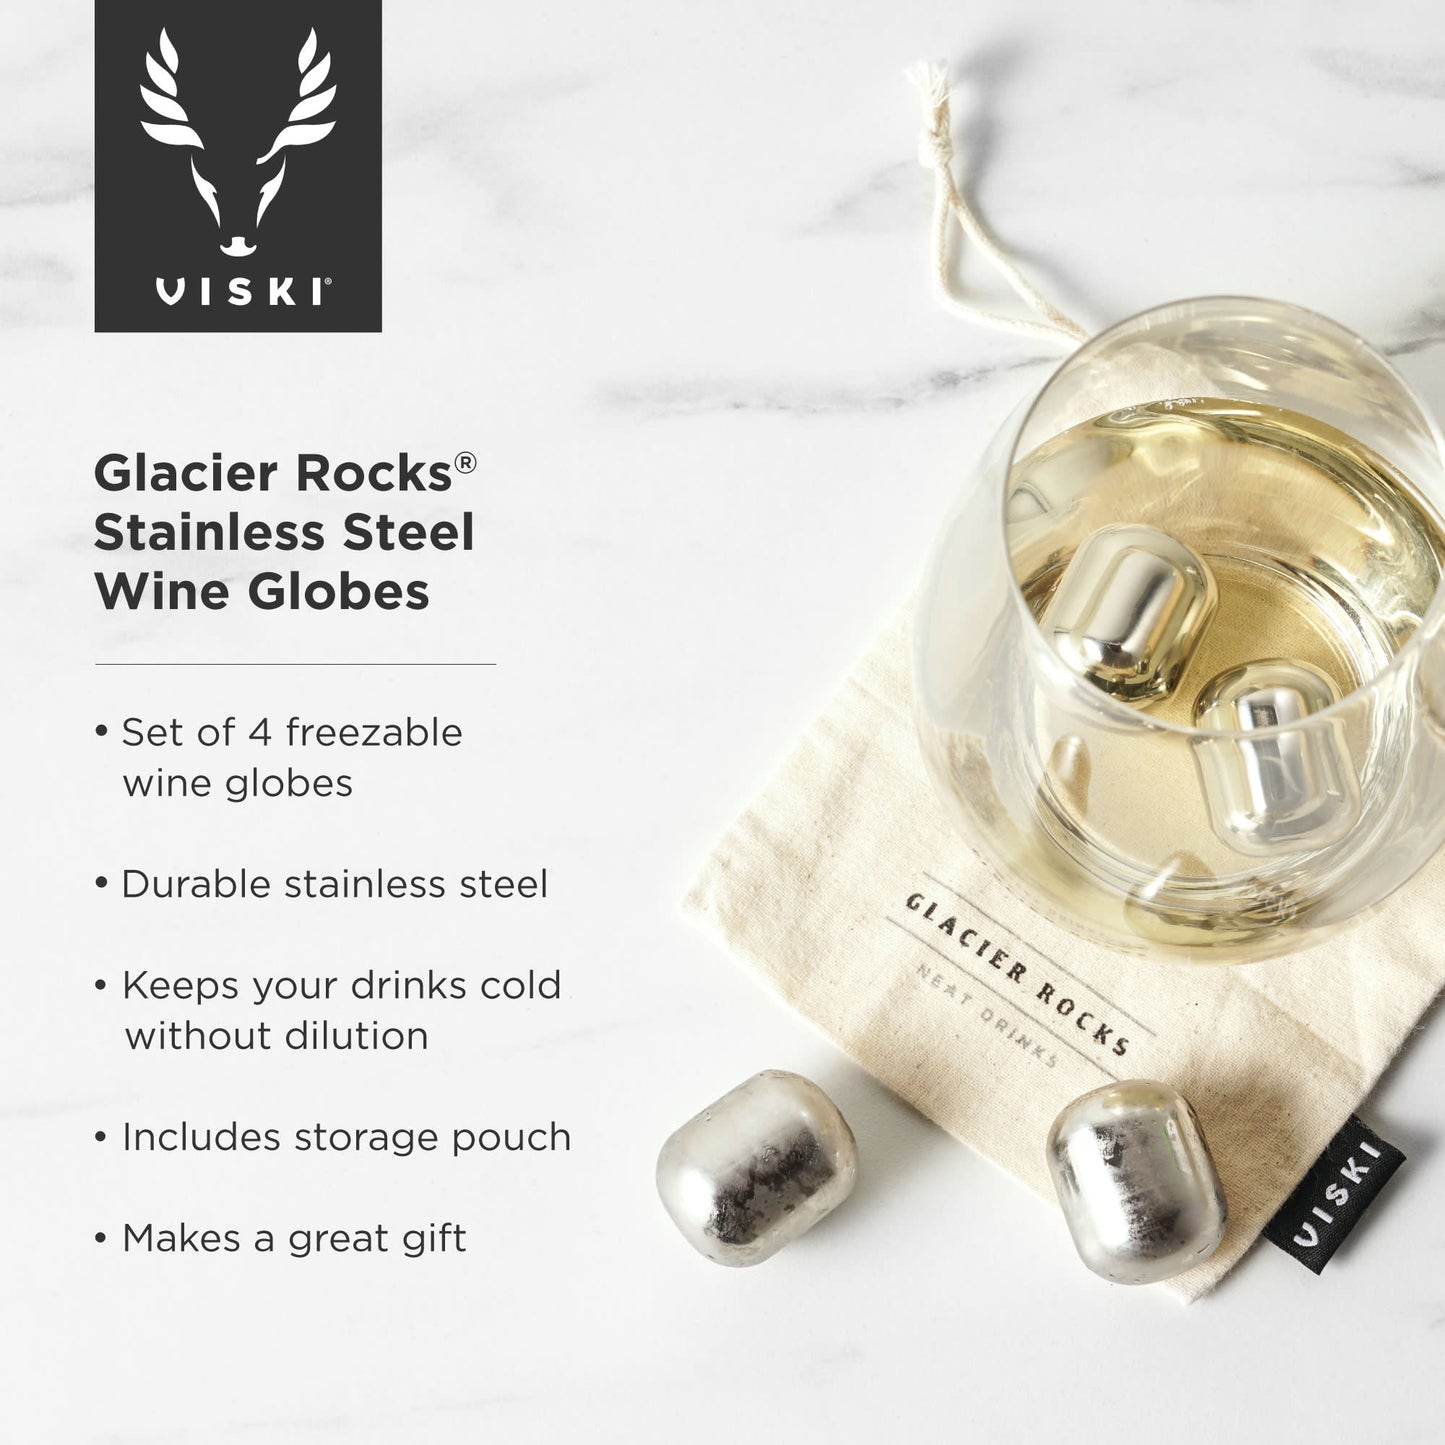 Glacier Rocks® Stainless Steel Wine Globes